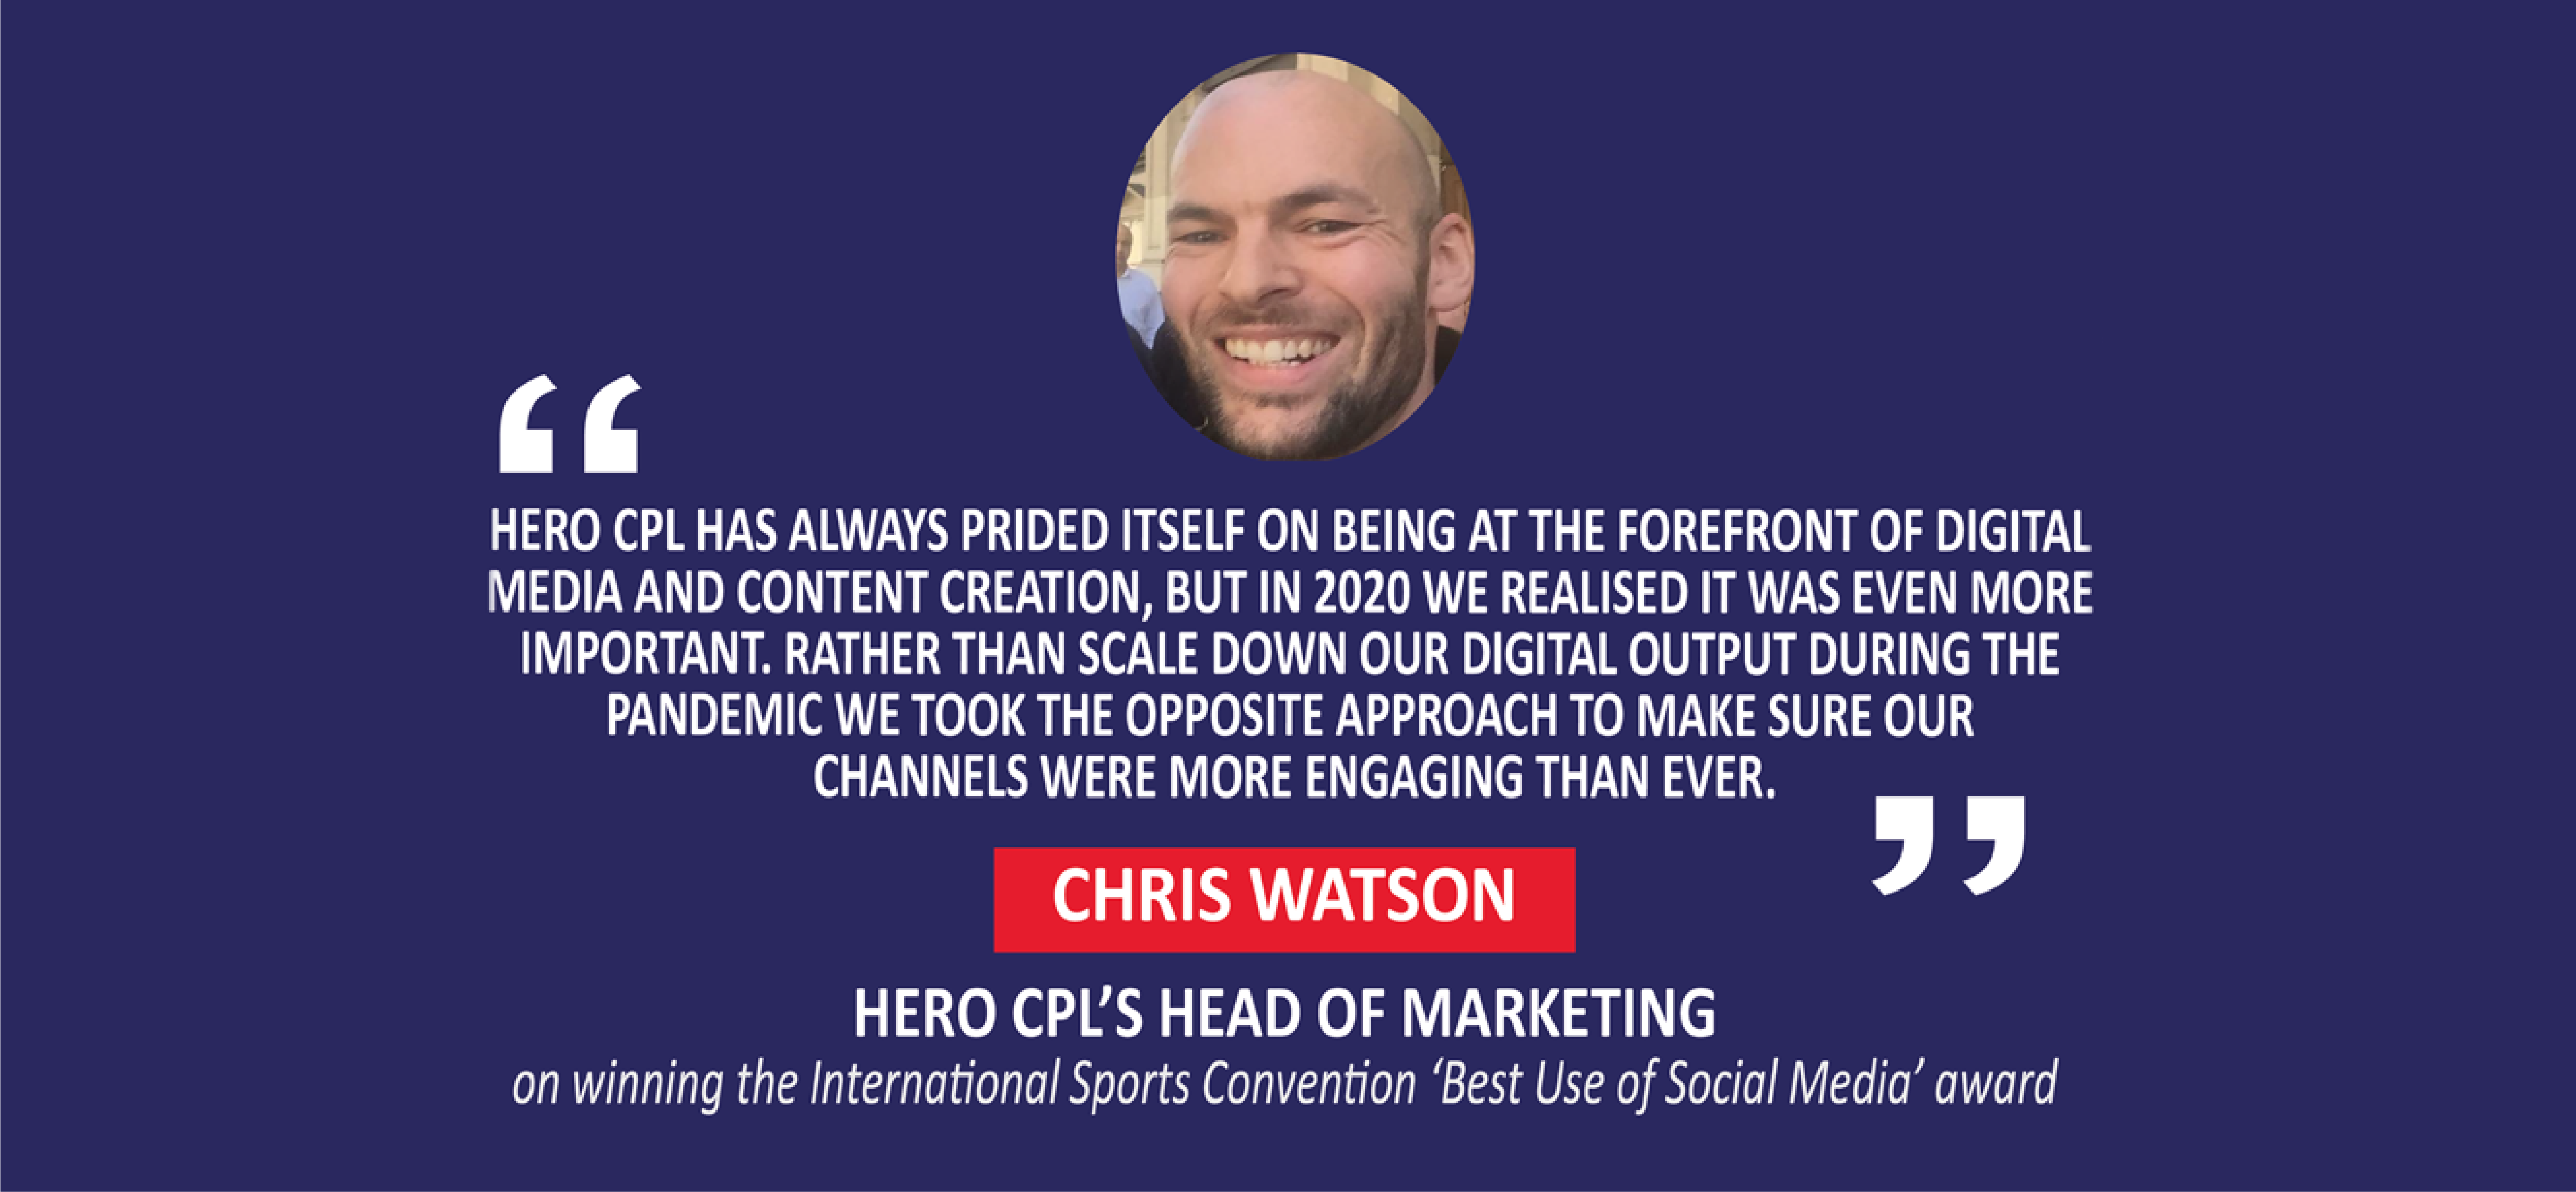 Chris Watson, Hero CPL’s Head of Marketing on winning the International Sports Convention ‘Best Use of Social Media’ award